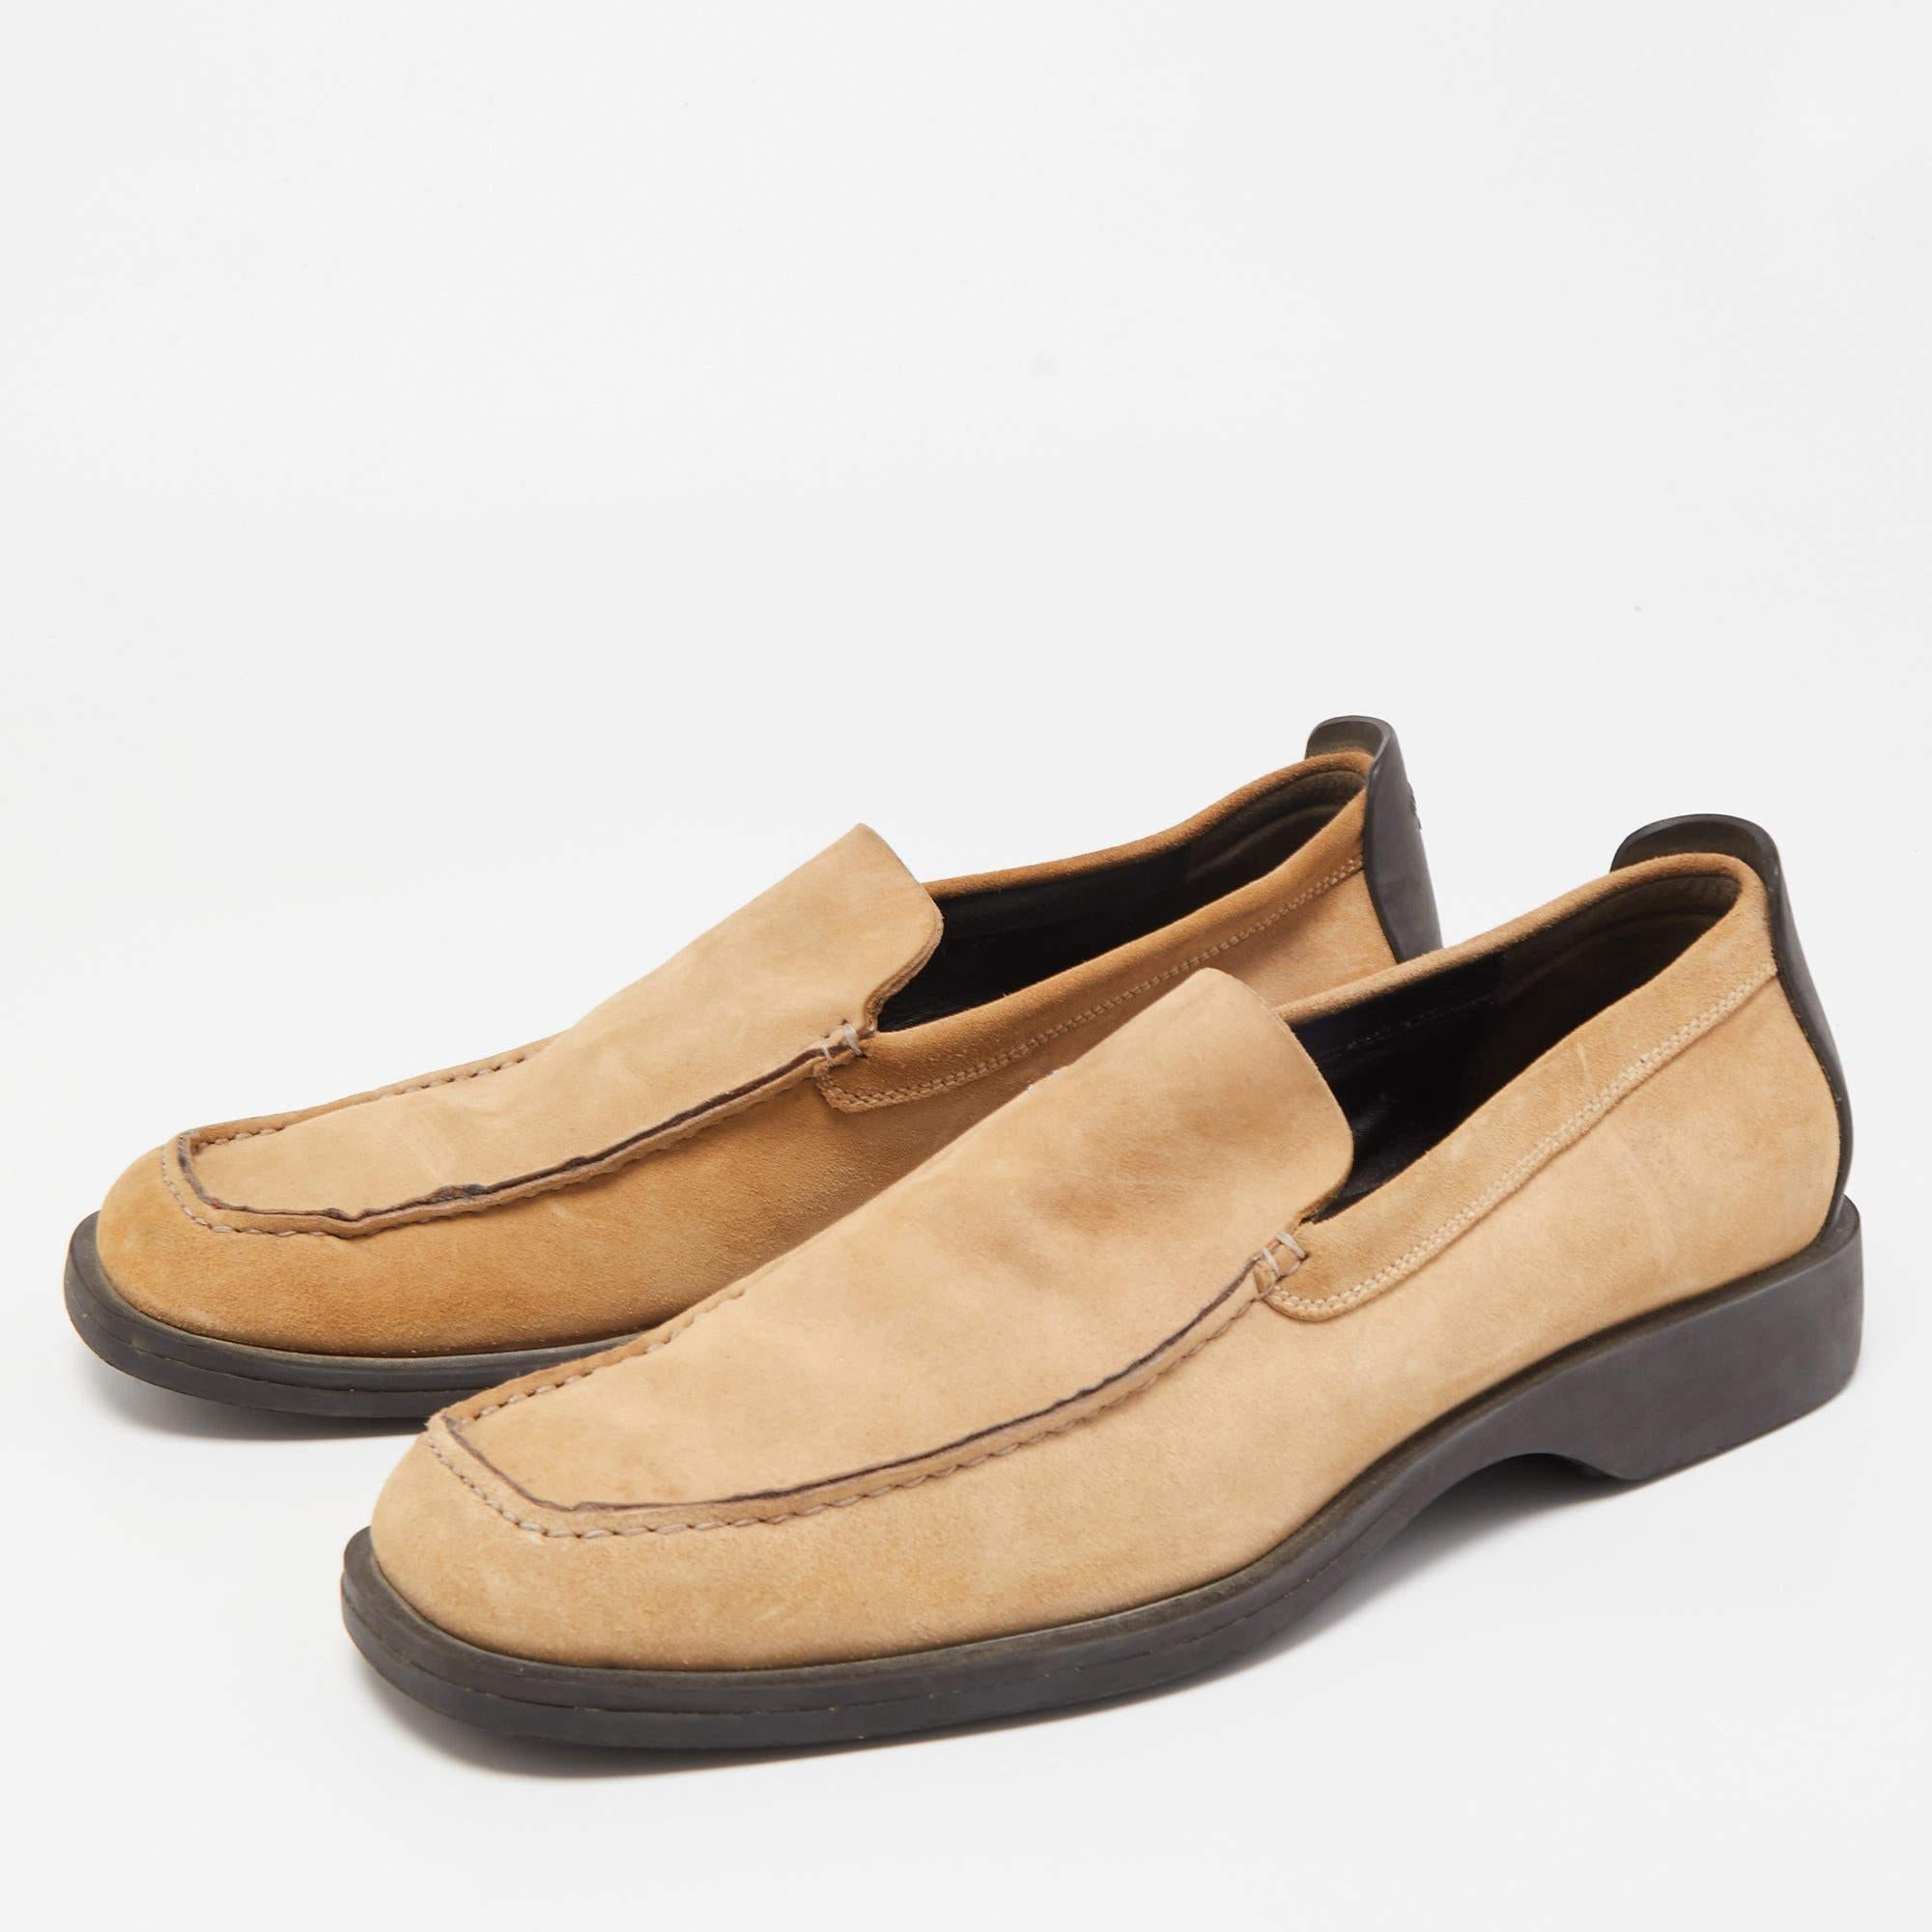 Gucci Beige Suede Slip On Loafers Size 43.5 In Good Condition For Sale In Dubai, Al Qouz 2